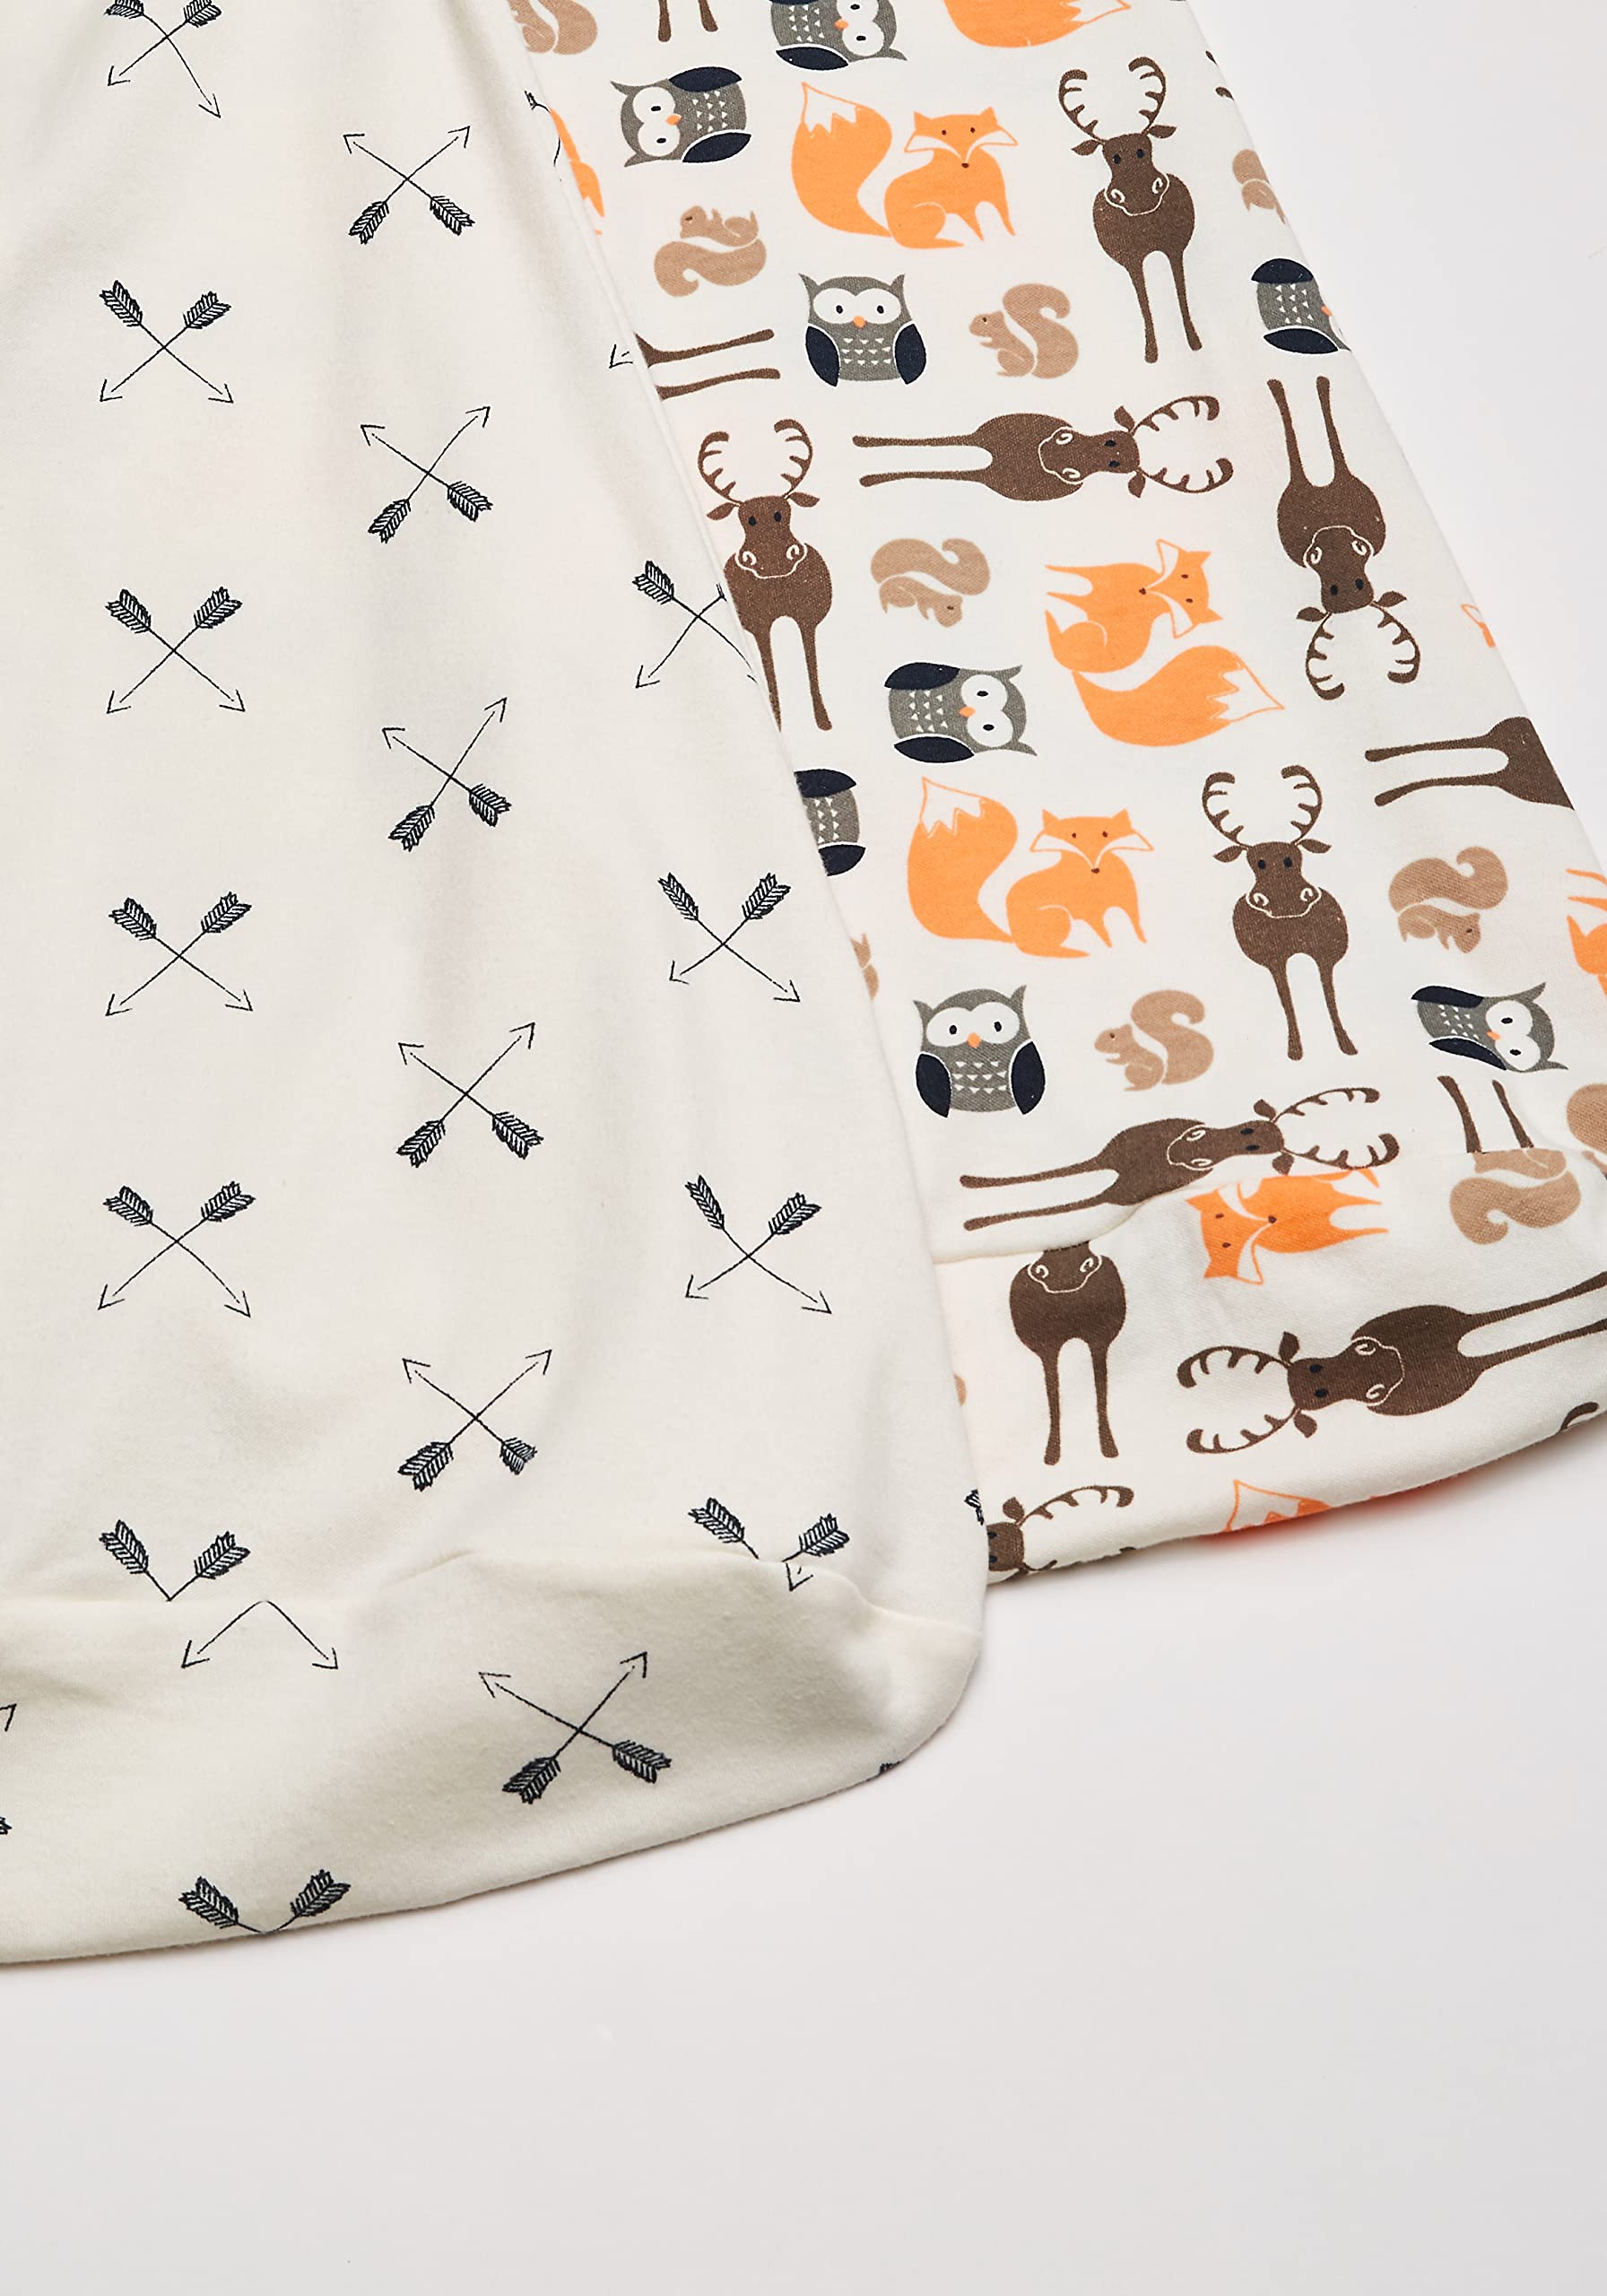 Hudson Baby Unisex Baby Cotton Long-Sleeve Wearable Sleeping Bag, Sack, Blanket